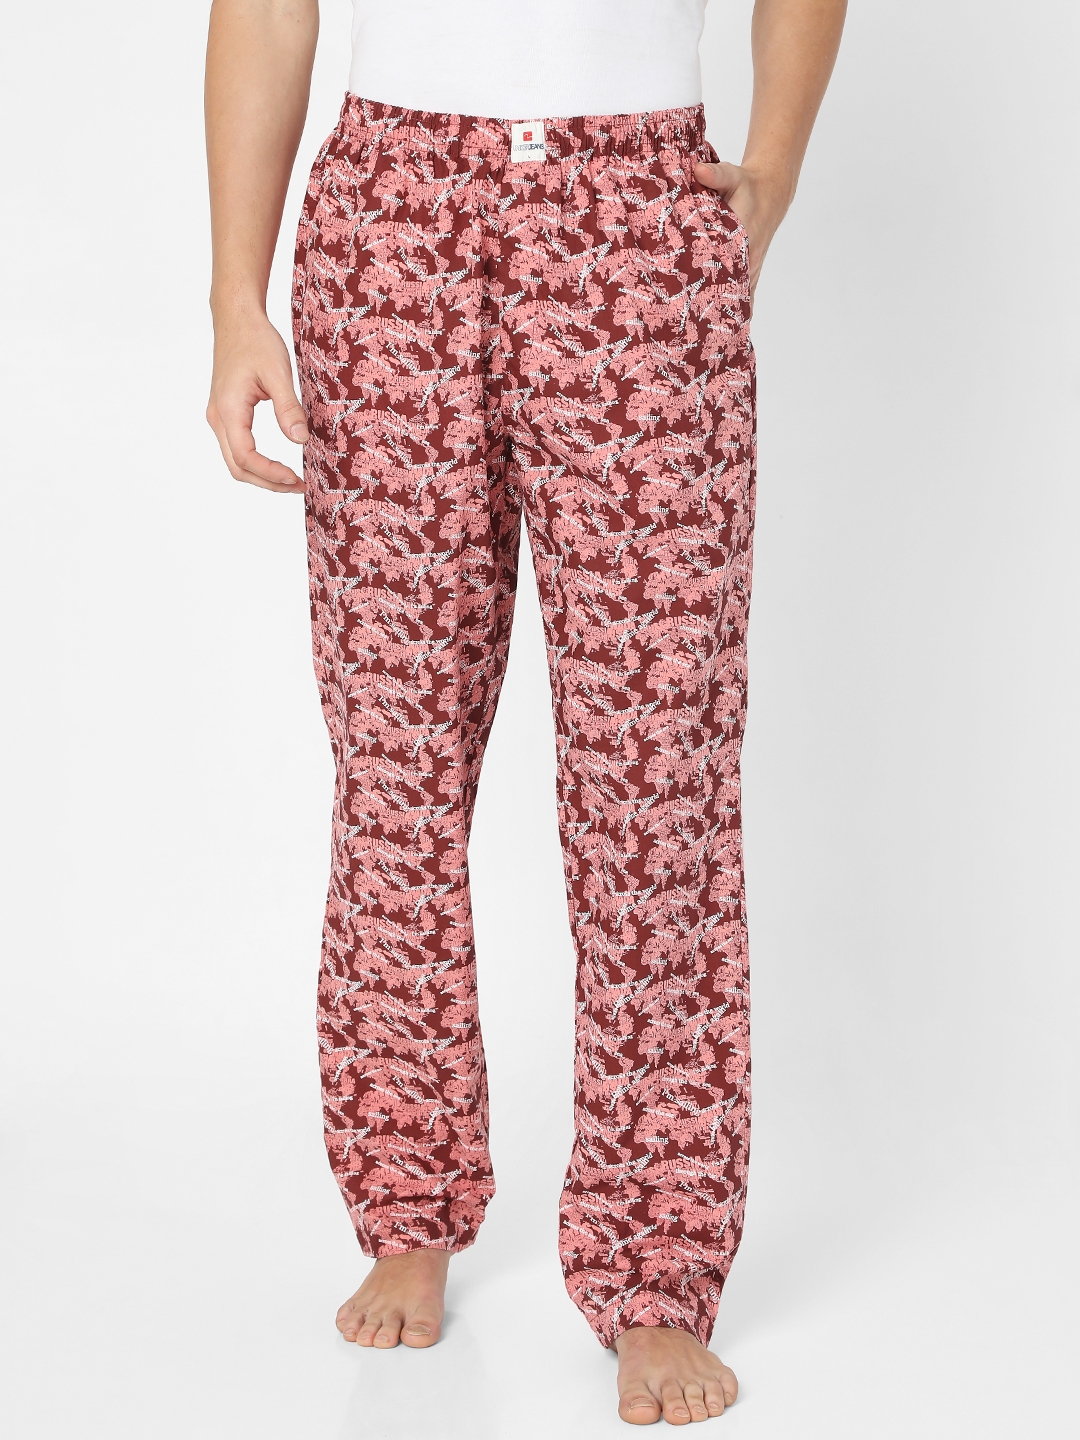 Underjeans by Spykar Red Cotton Blend Regular Fit Pyjama